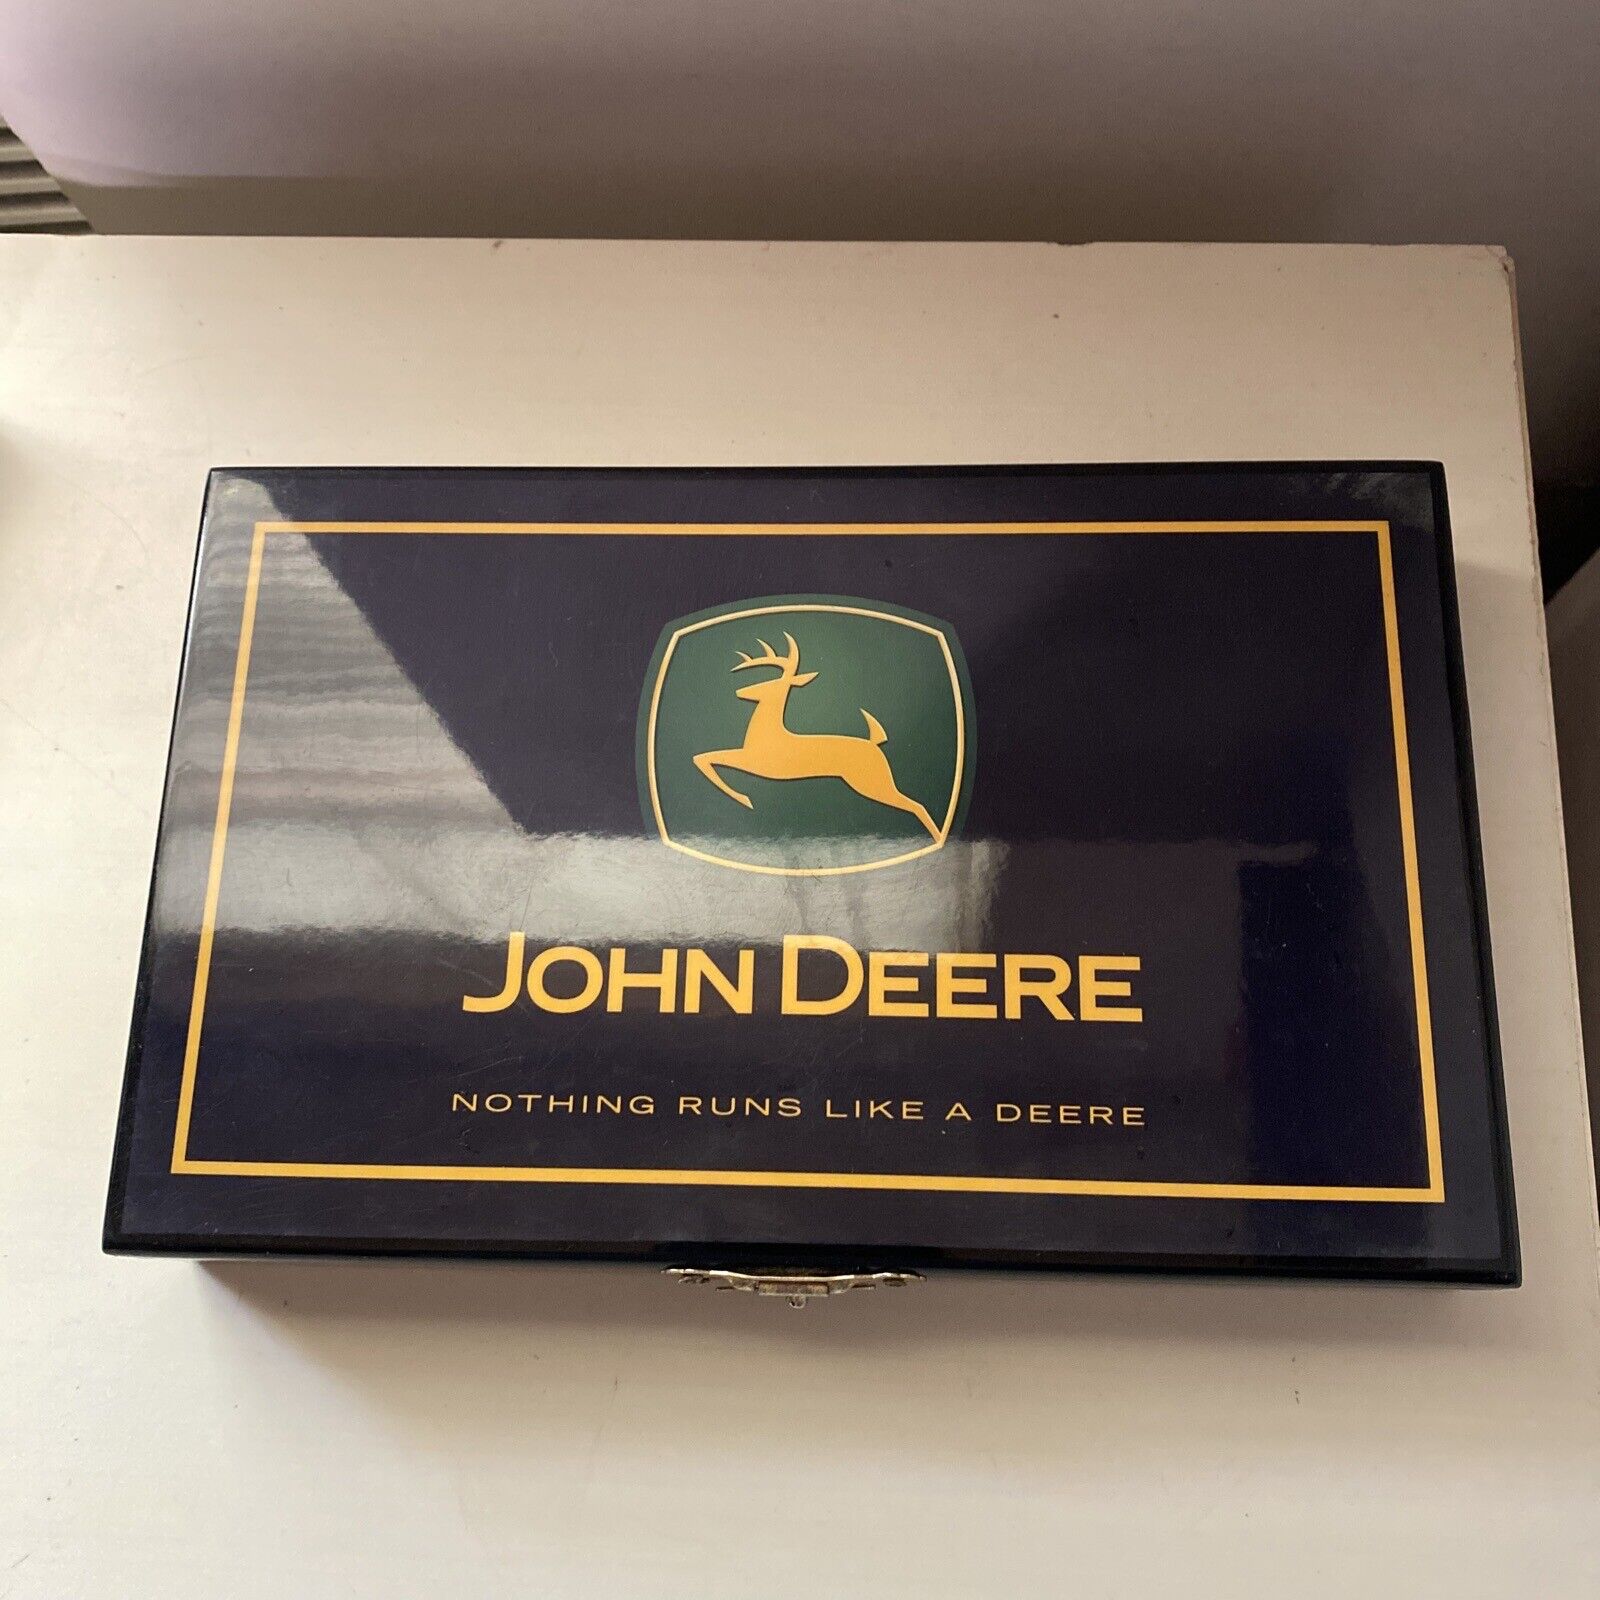 John Deere advertising promotional Domino’s set vintage black Lacquer box